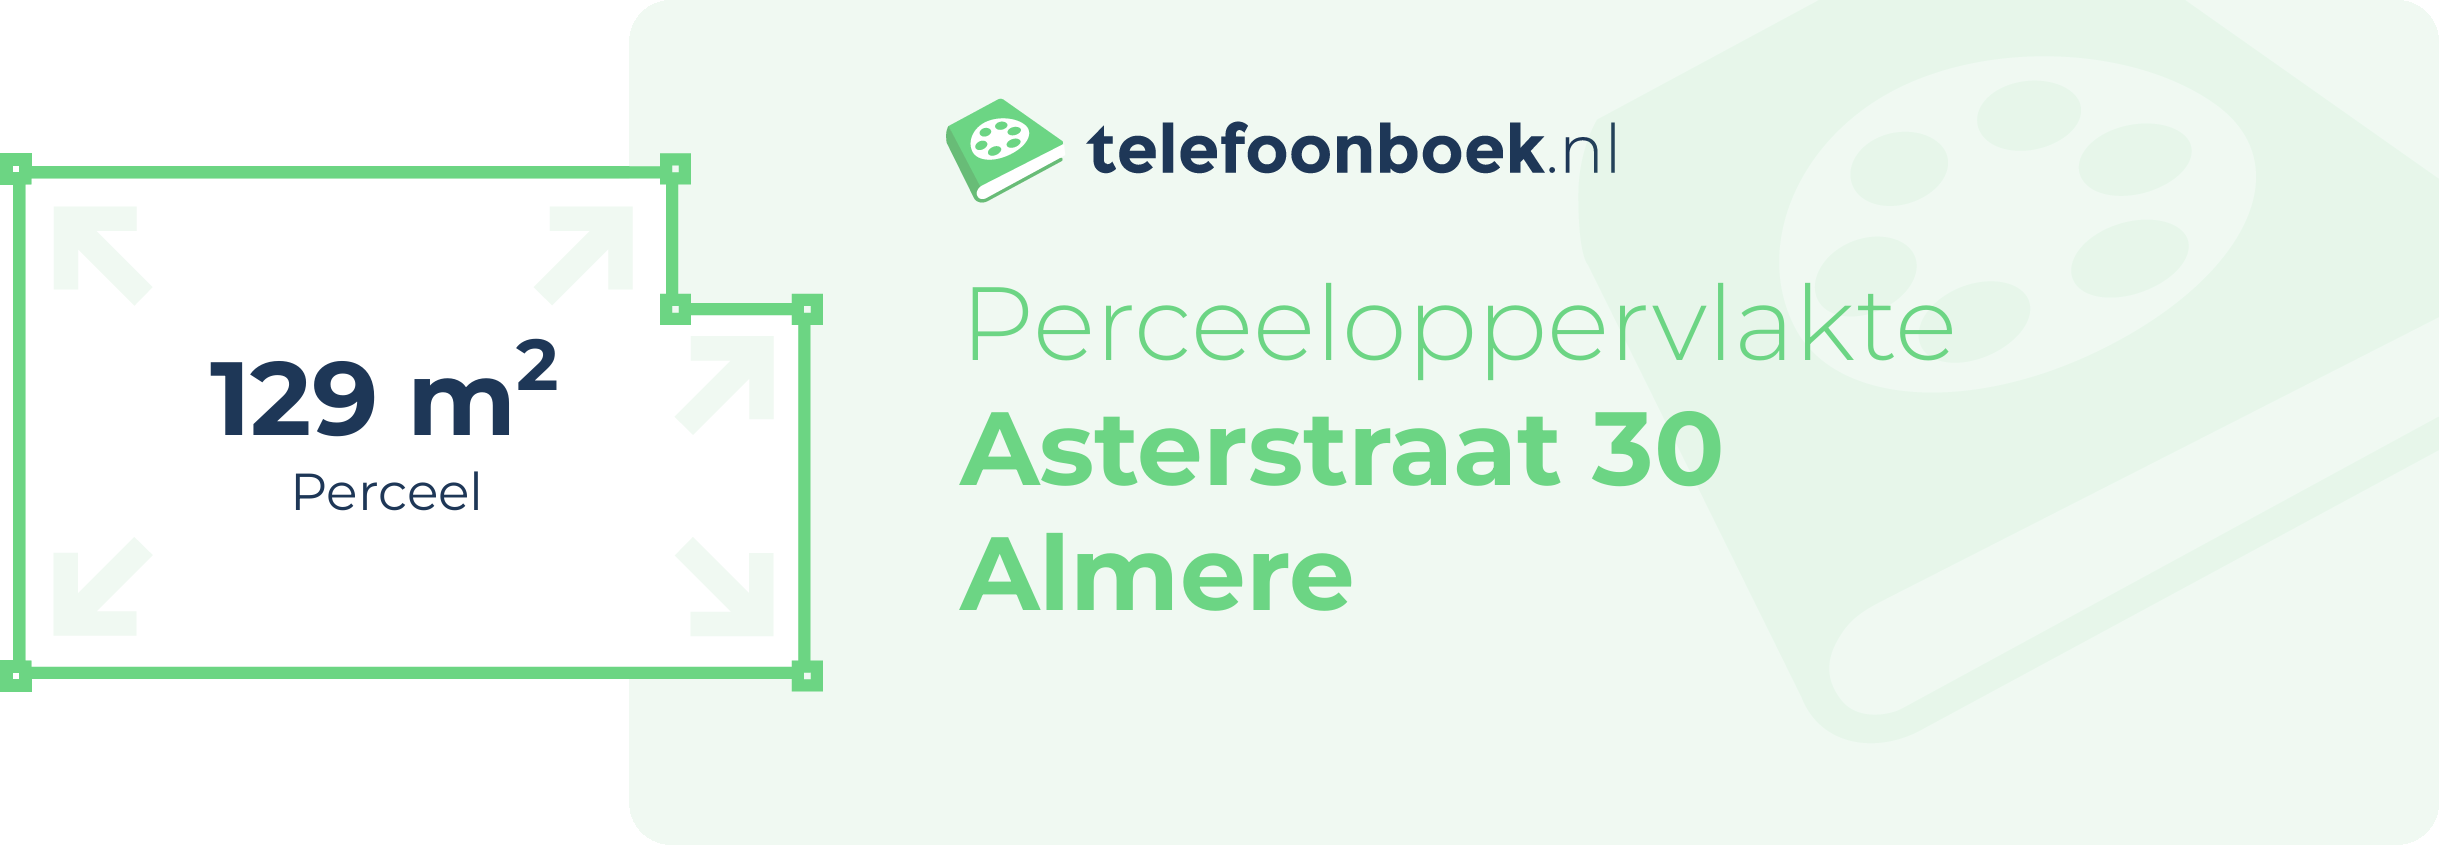 Perceeloppervlakte Asterstraat 30 Almere